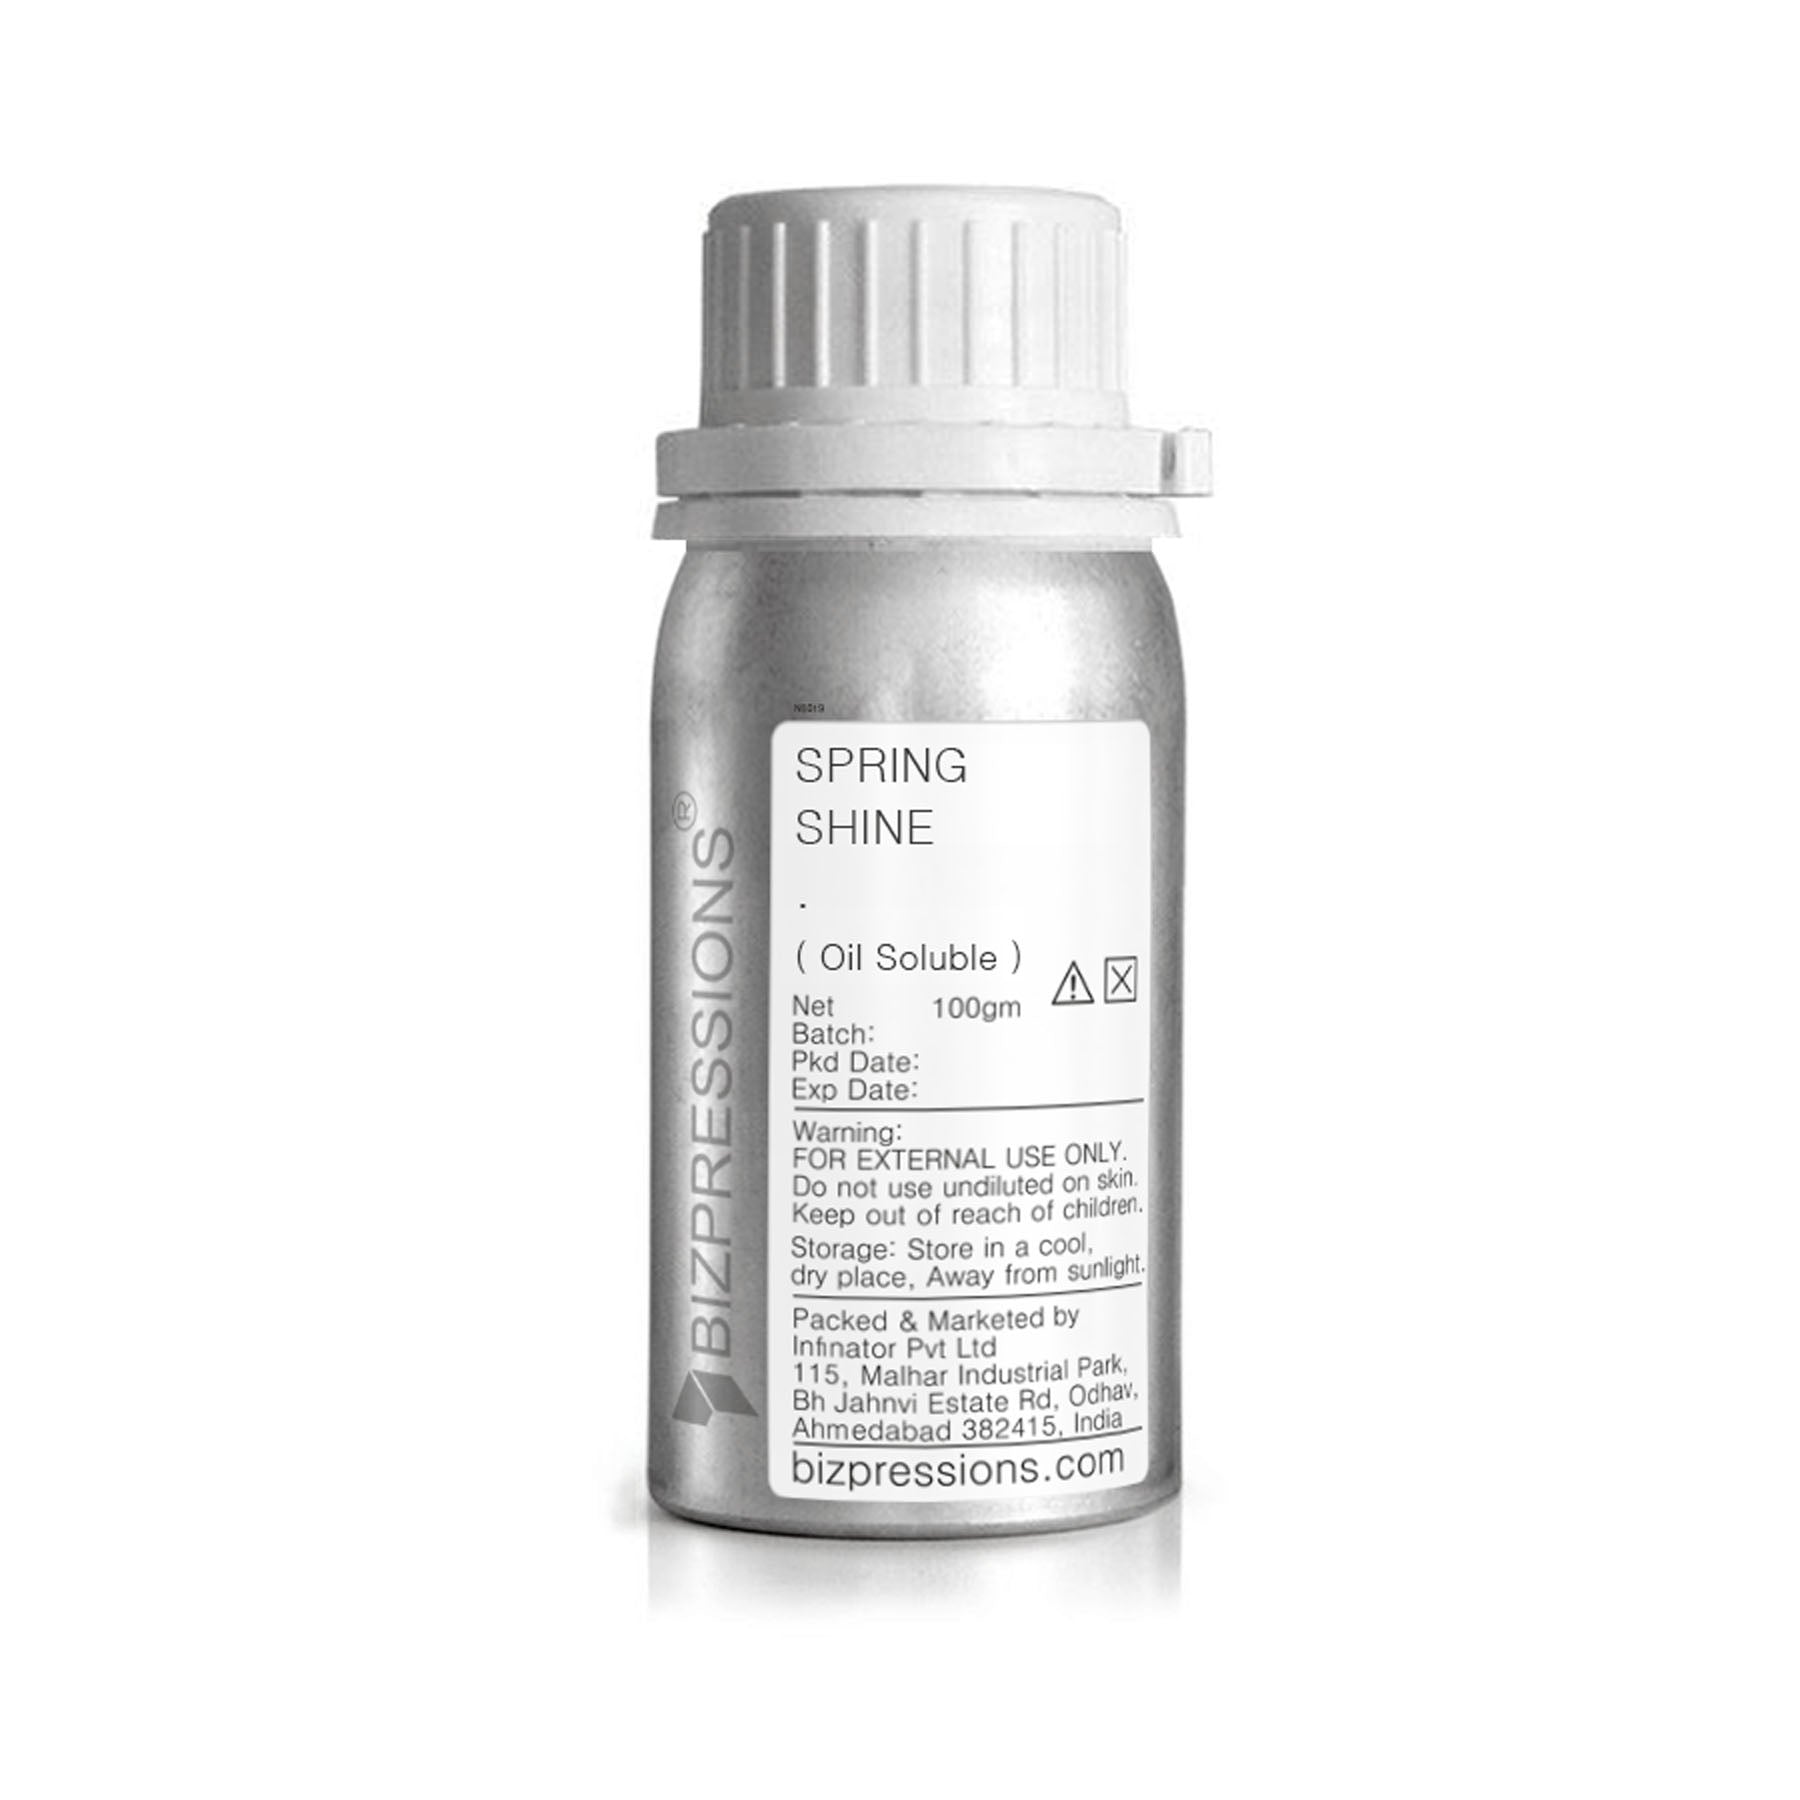 SPRING SHINE - Fragrance ( Oil Soluble ) - 100 gm